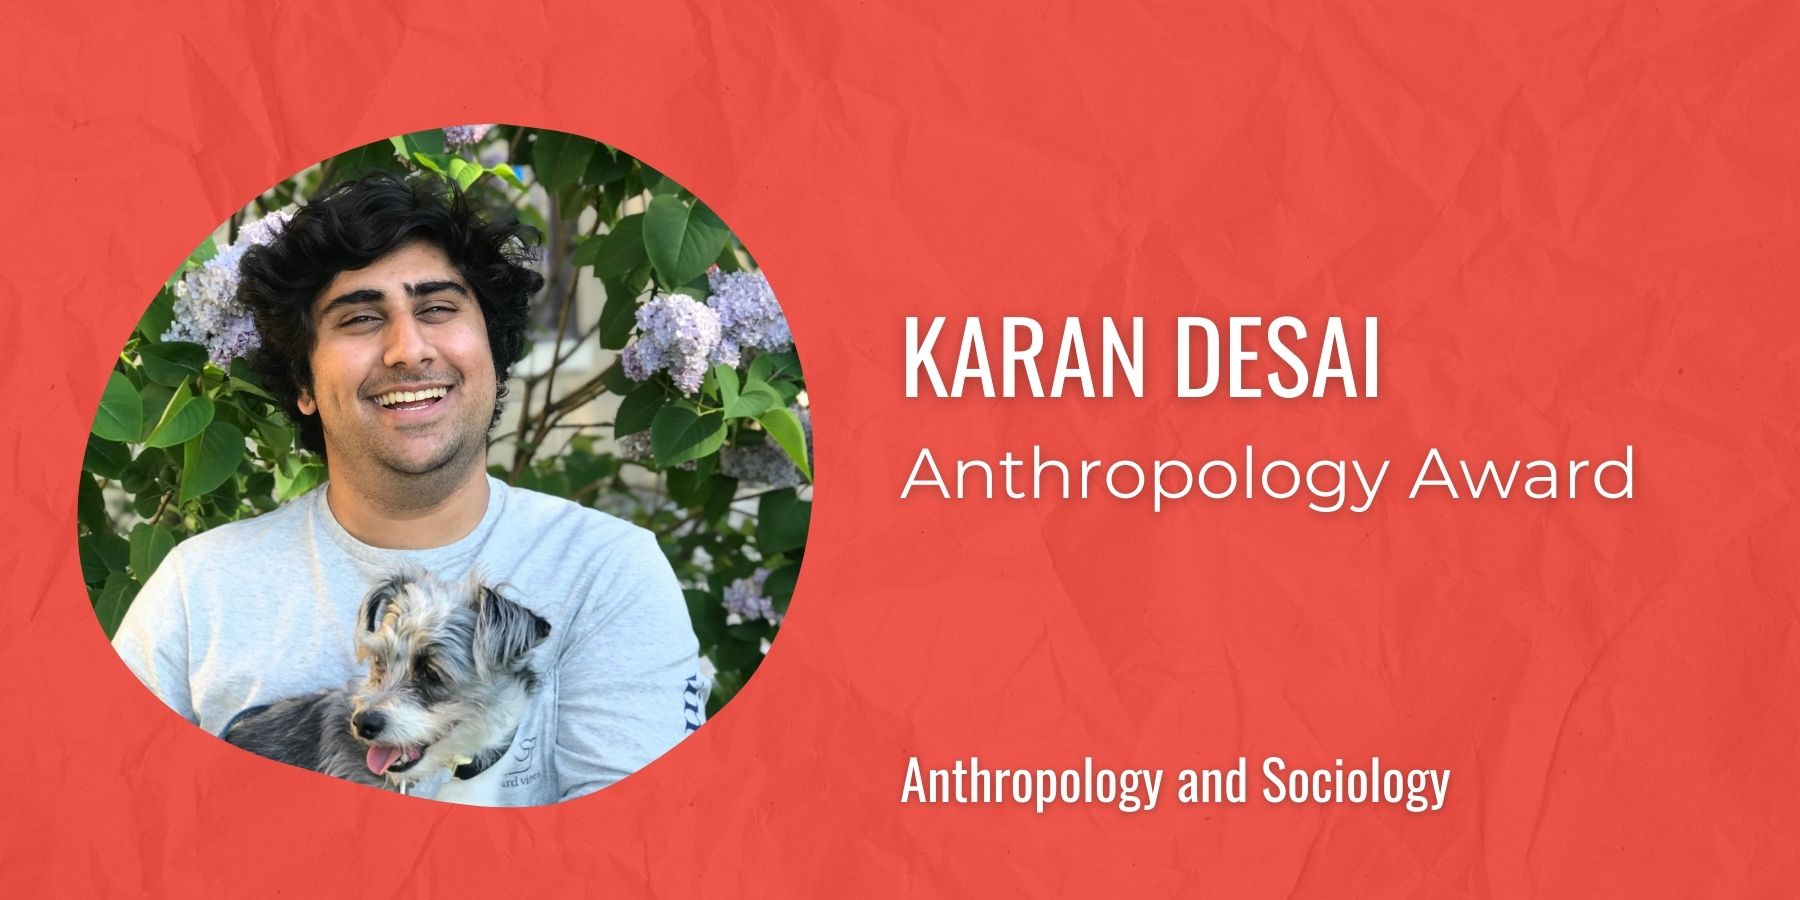 Image of Karan Desai with text: Anthropology Award, Anthropology and Sociology
